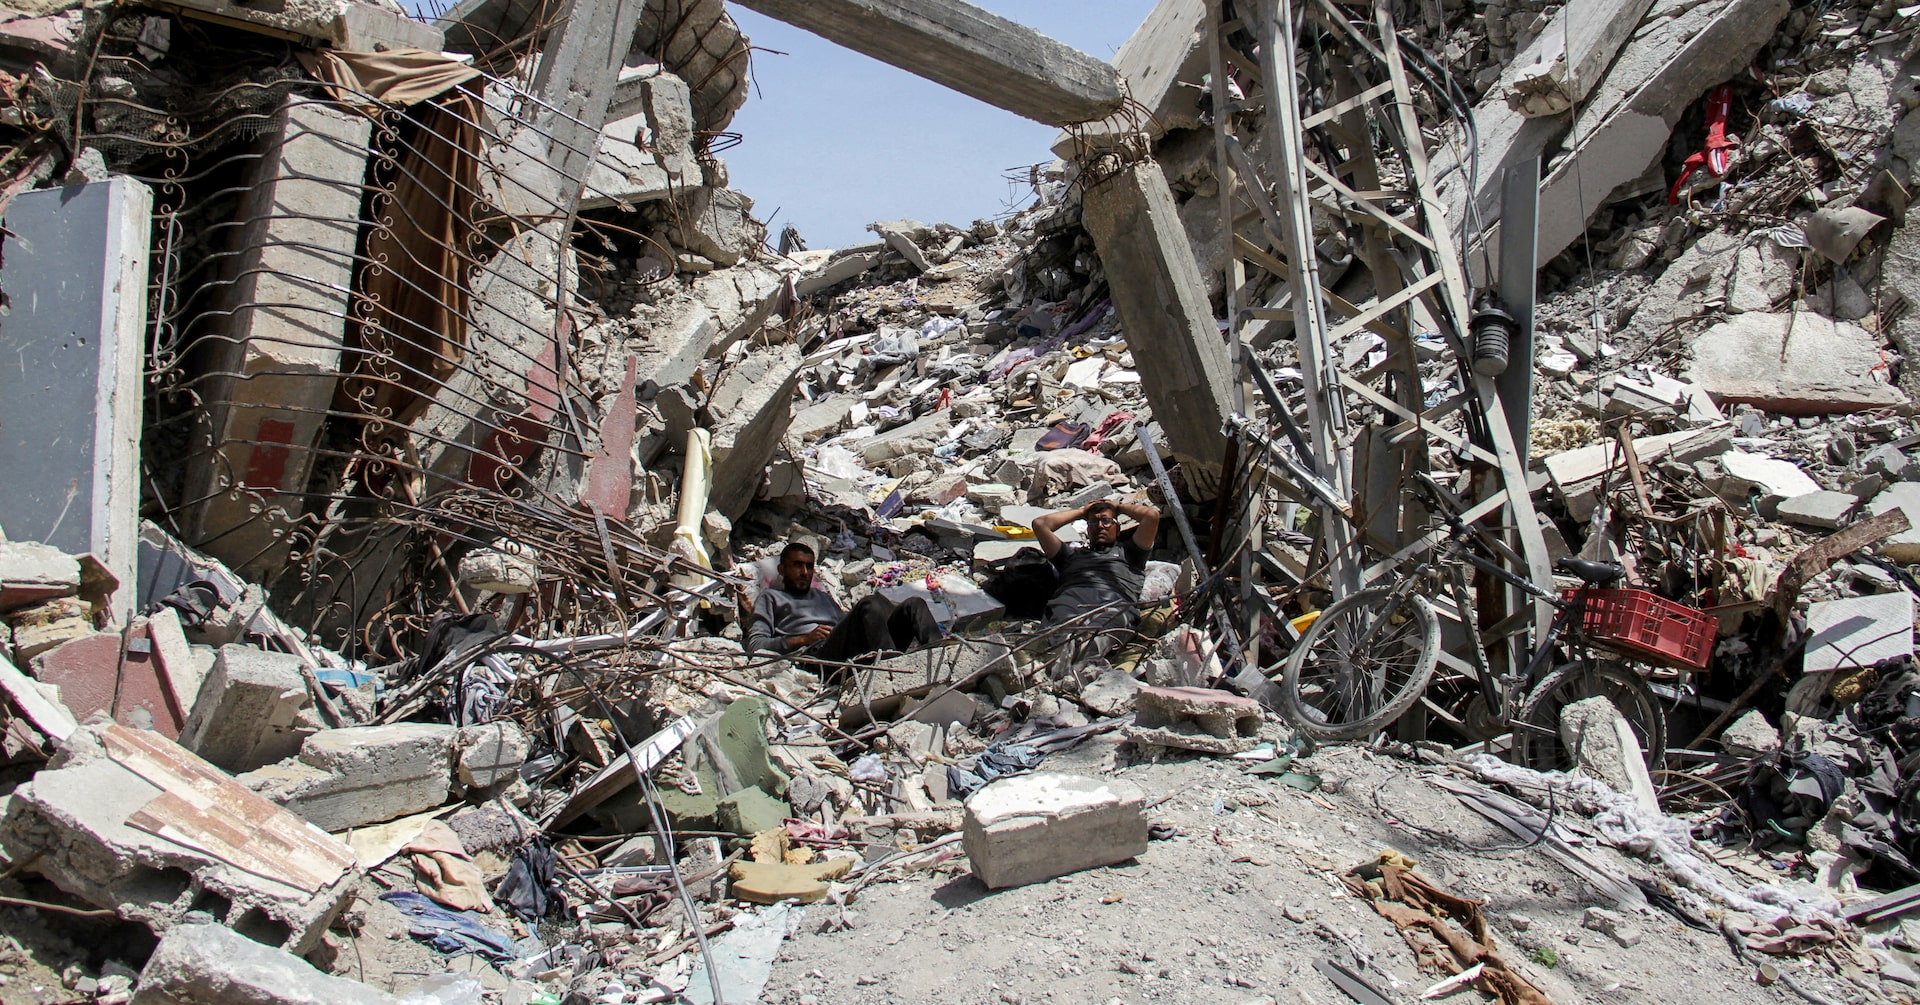 rebuilding-bombed-gaza-homes-may-take-80-years,-un-says